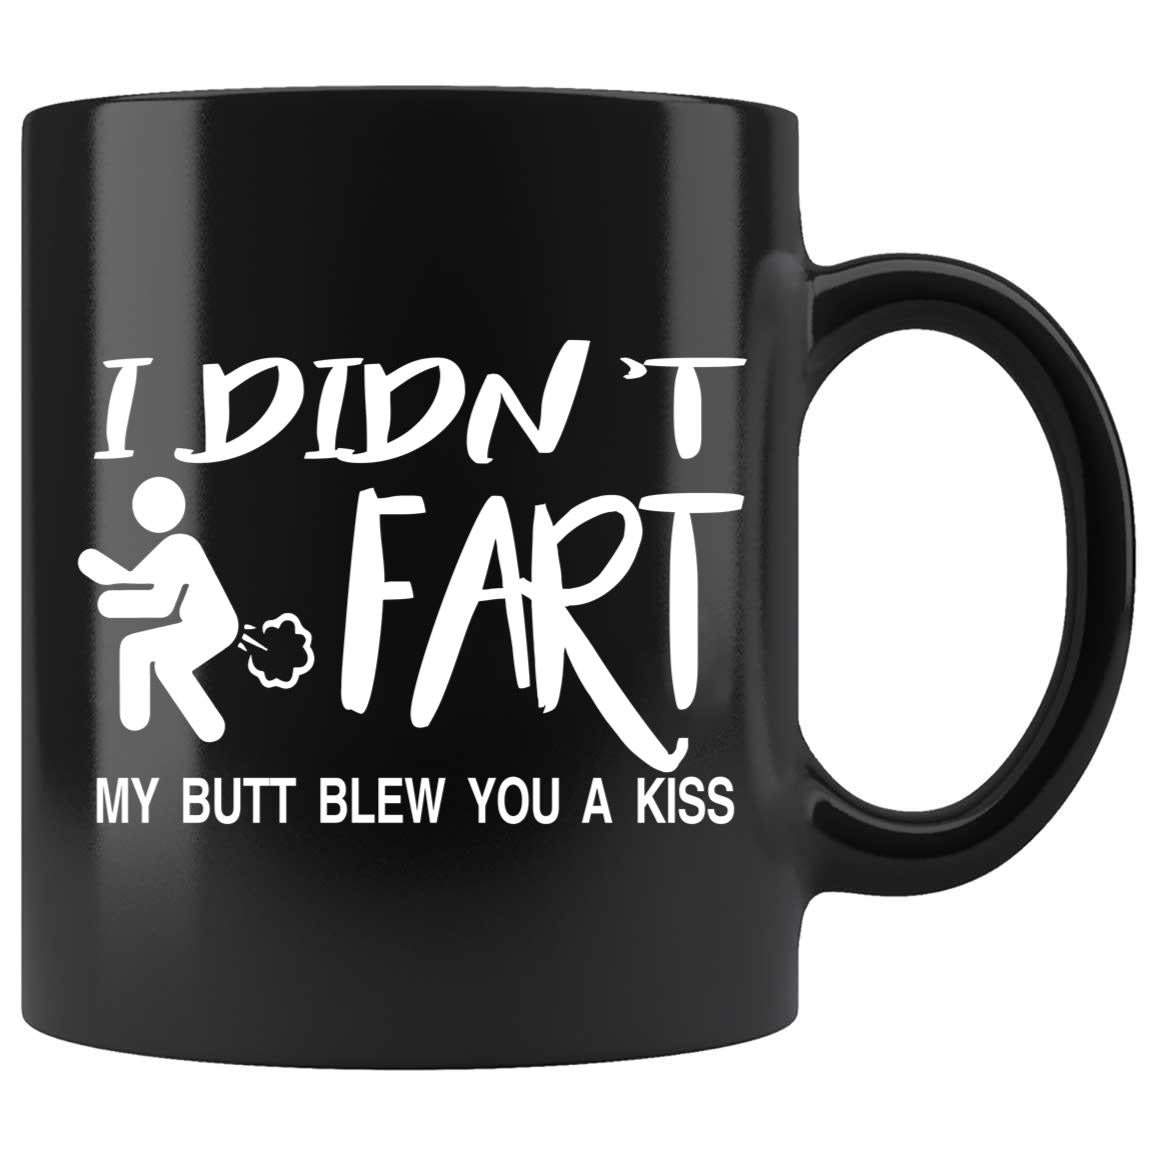 Skitongifts Coffee Mug Funny Ceramic Novelty I Didn't Fart My Butt Blew You A Kiss AVXGJti